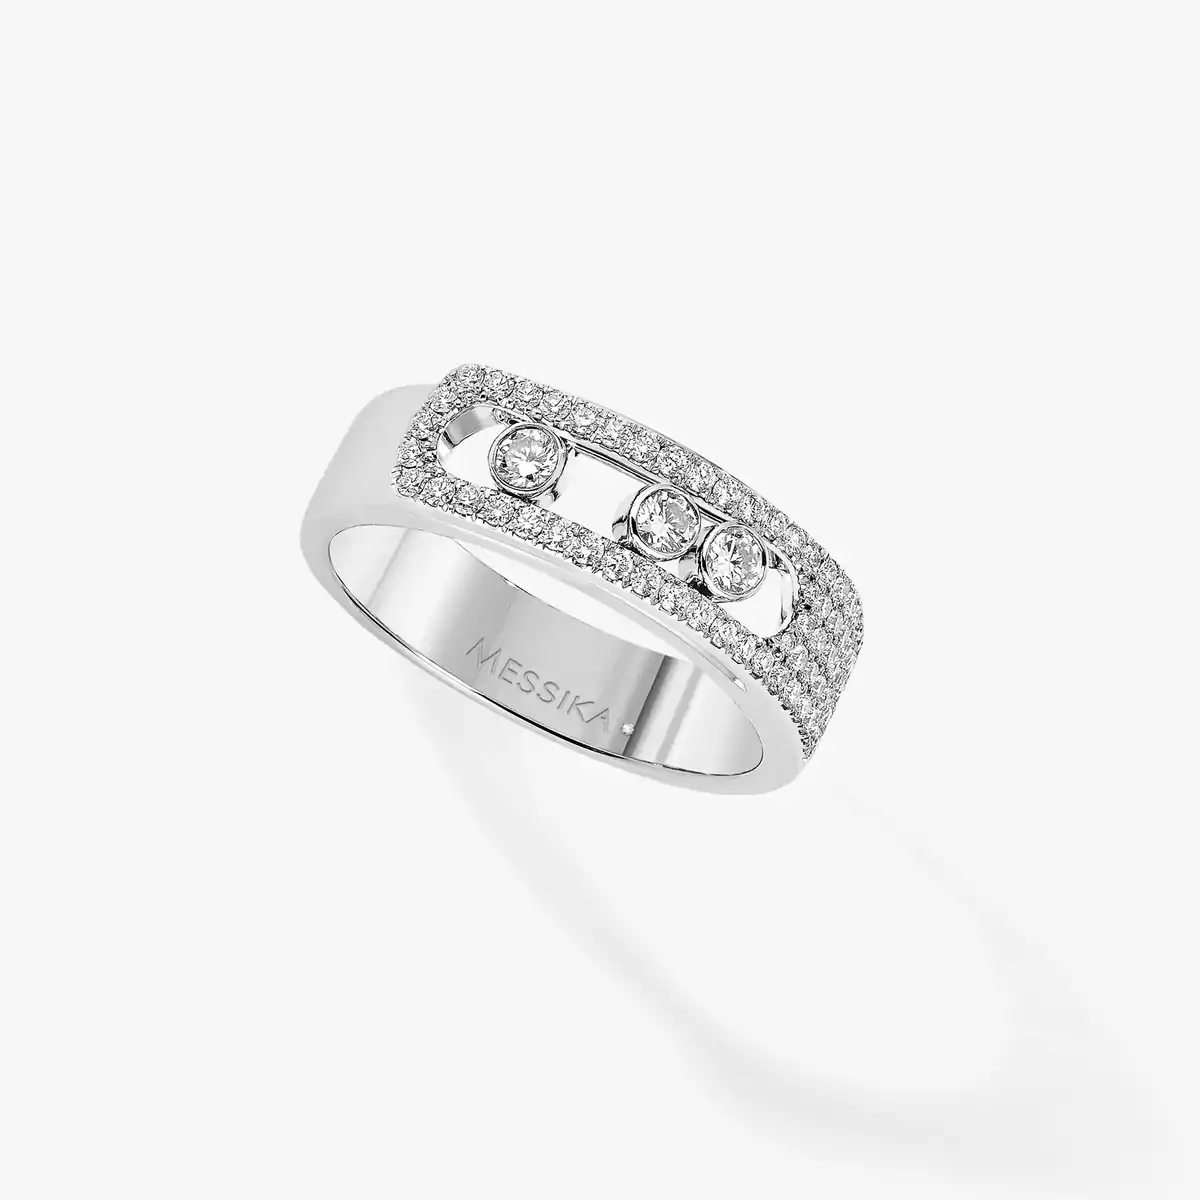 Move Noa Pavé White Gold For Her Diamond Ring 06129-WG